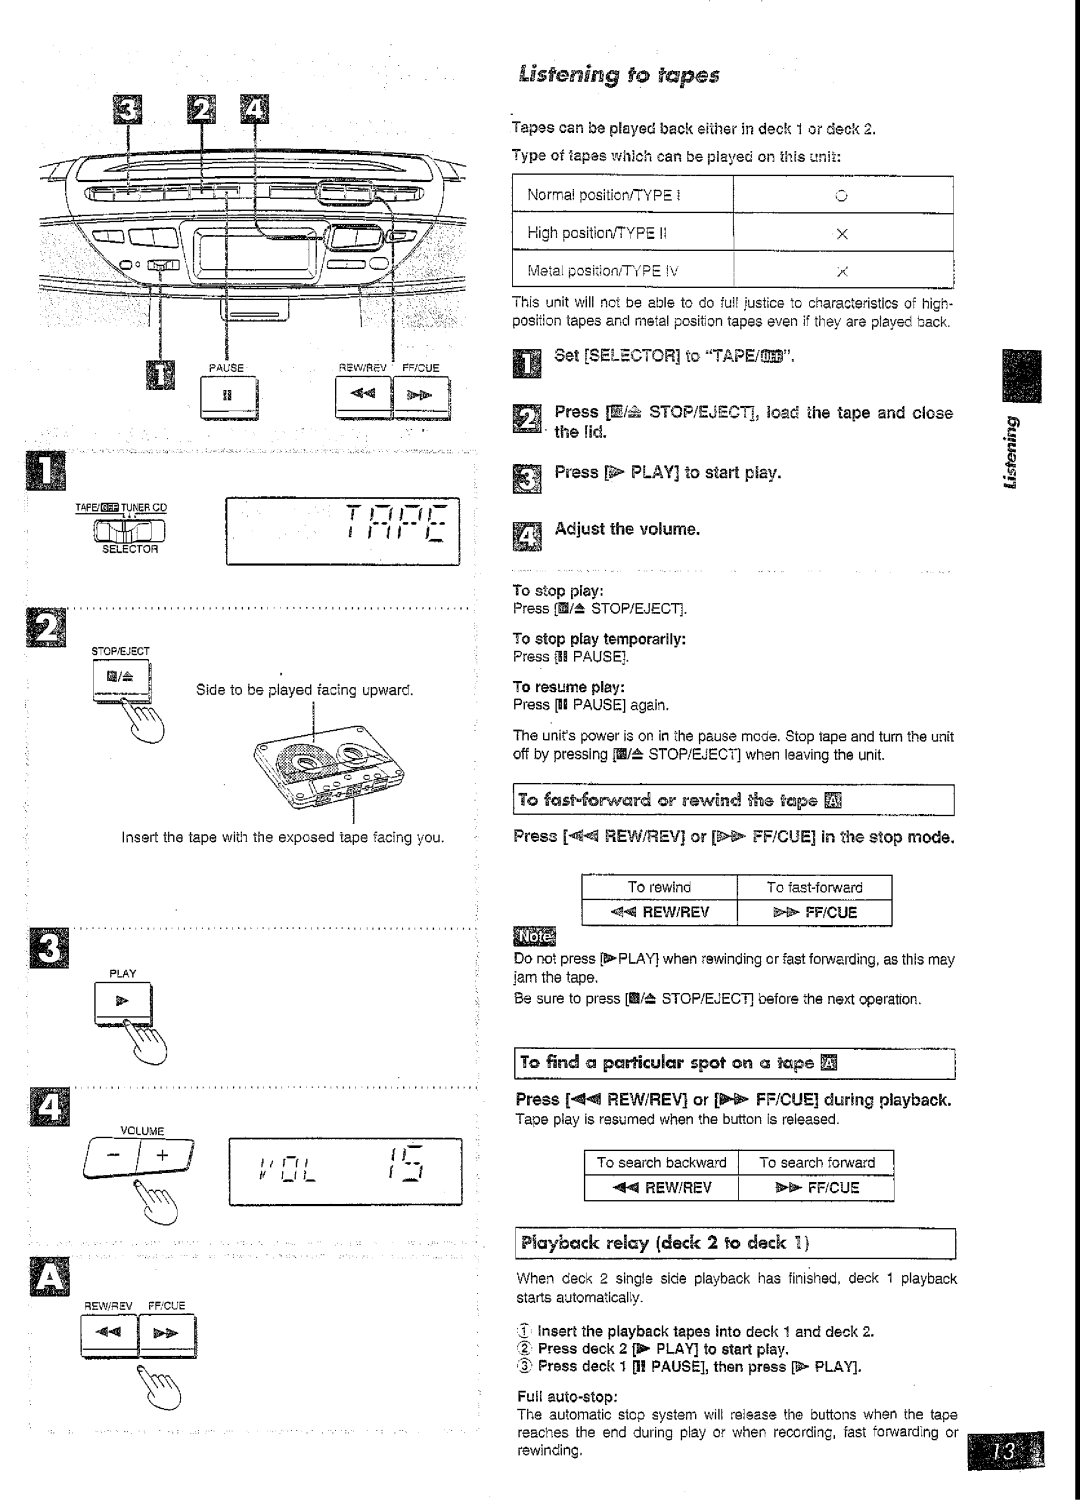 Panasonic RX-DT39 manual 